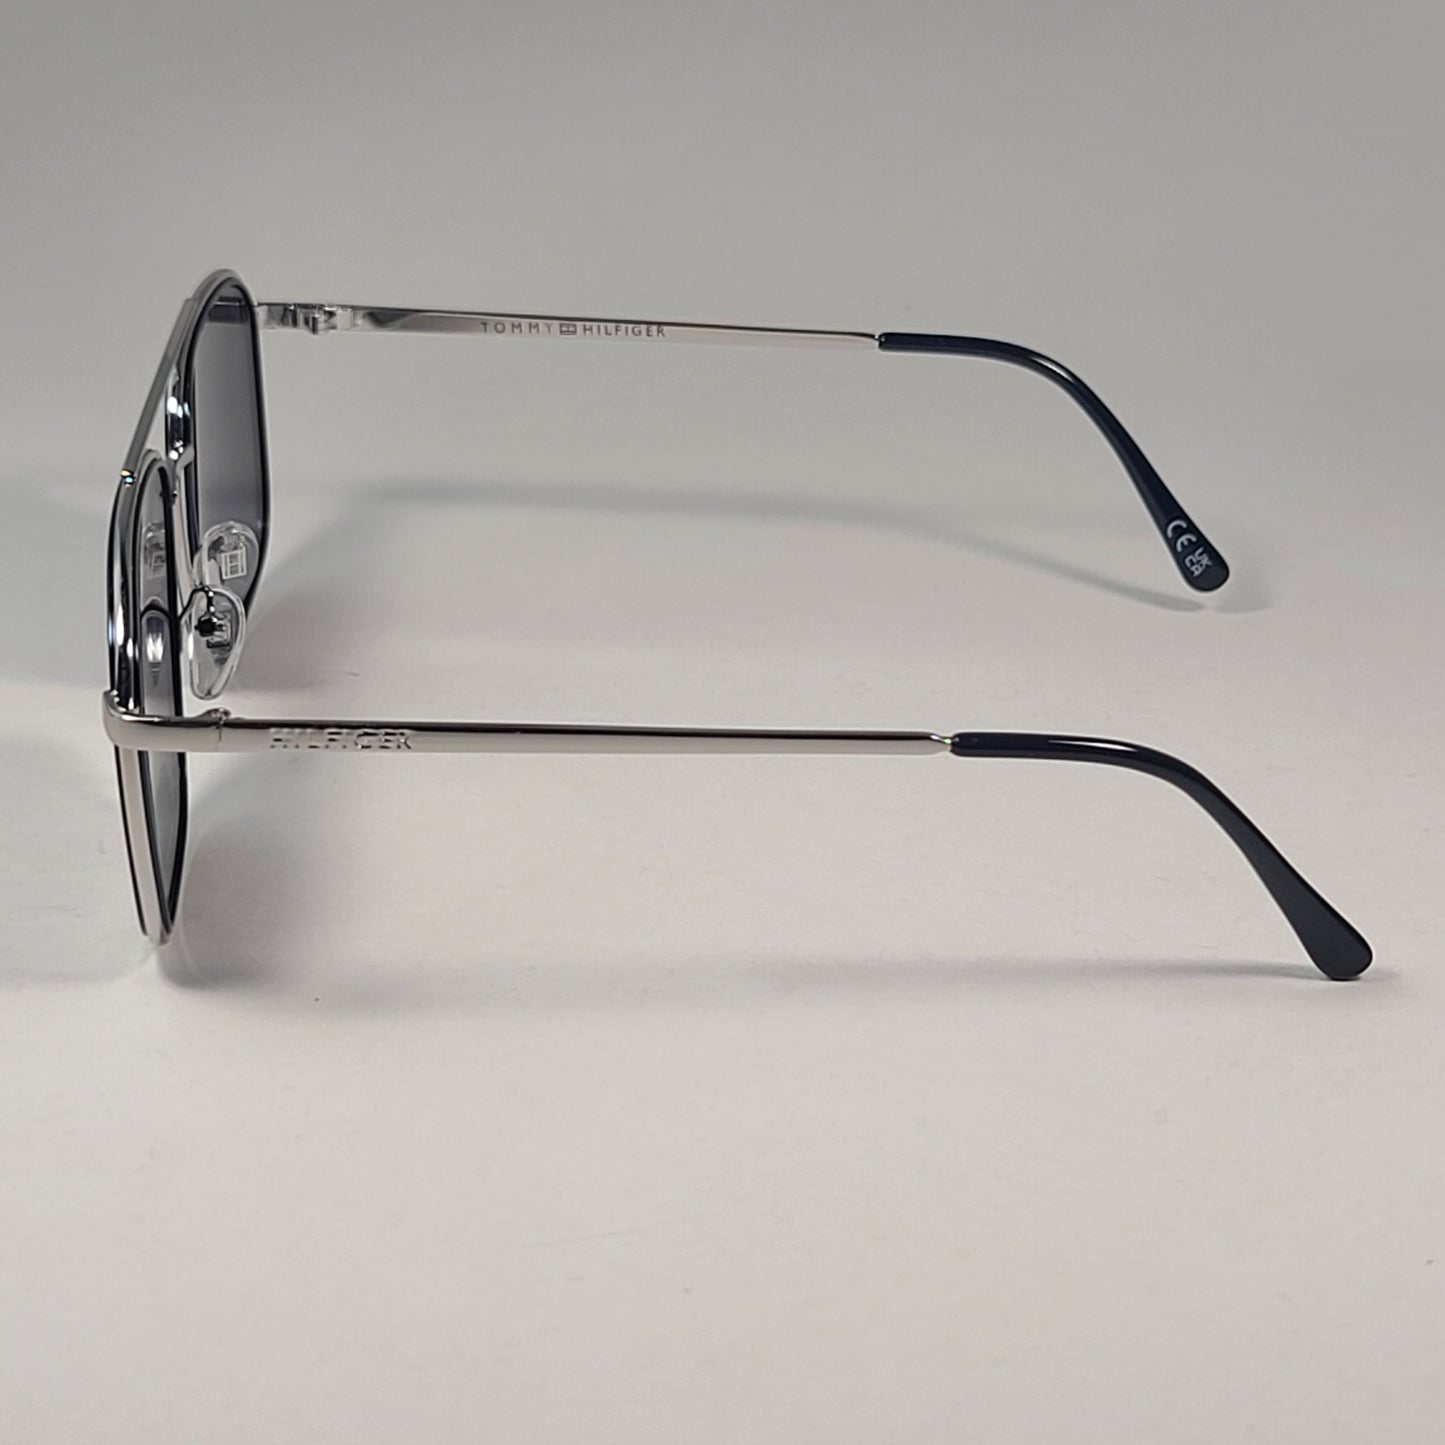 Tommy Hilfiger "Alesso" MM OM612 Pilot Sunglasses Silver Navy Frame Gray Lens